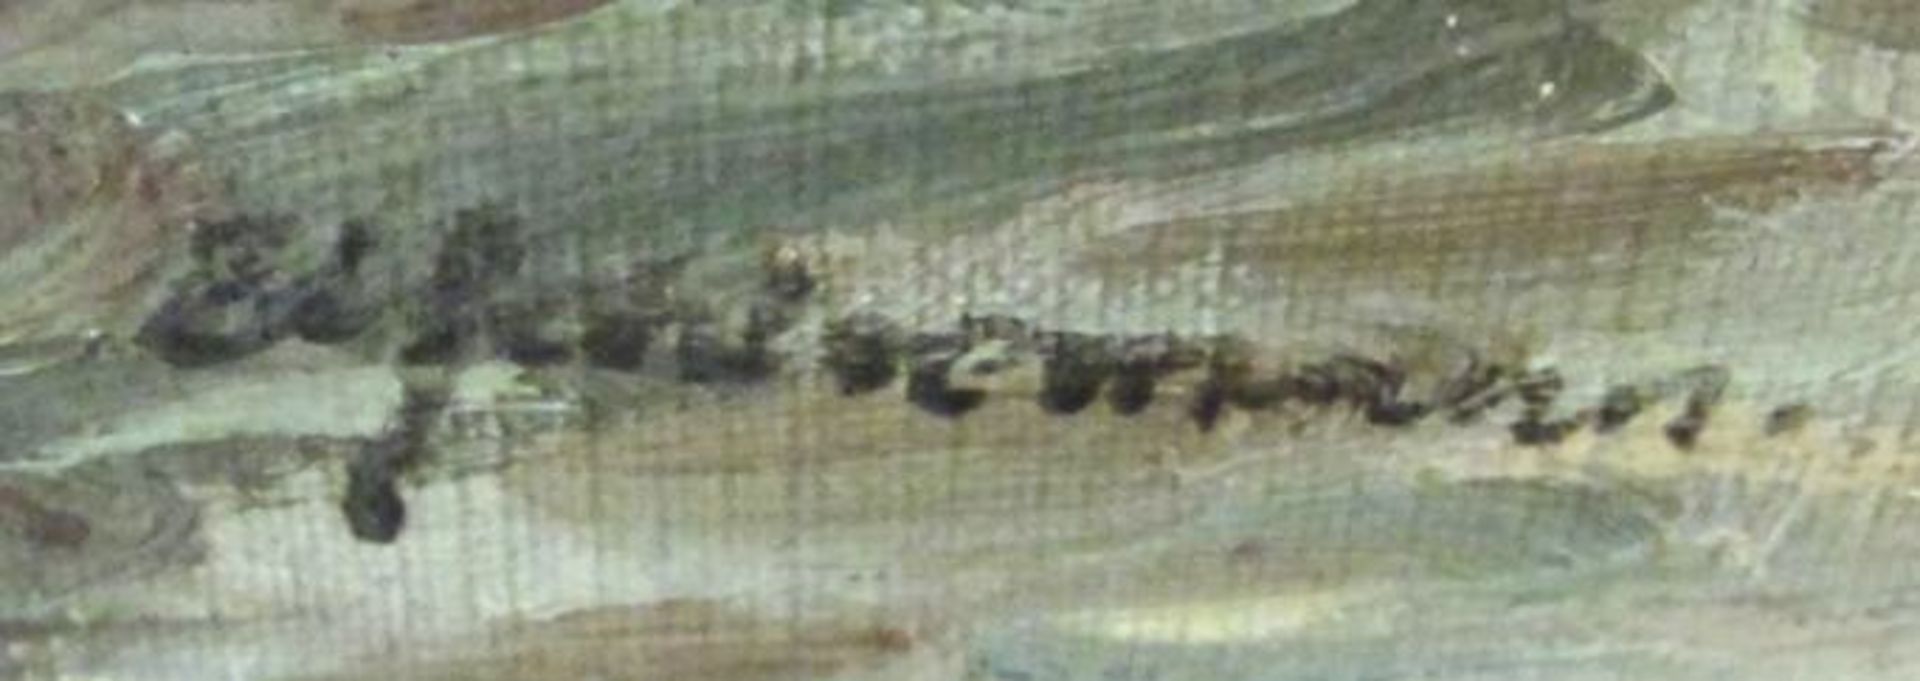 unleserlsigniert "Boot im Dock", wohl Anf. 20. Jhd., Öl/Leinwand, gerahmt, RG 73,5 x 93,5cm. - Bild 2 aus 3